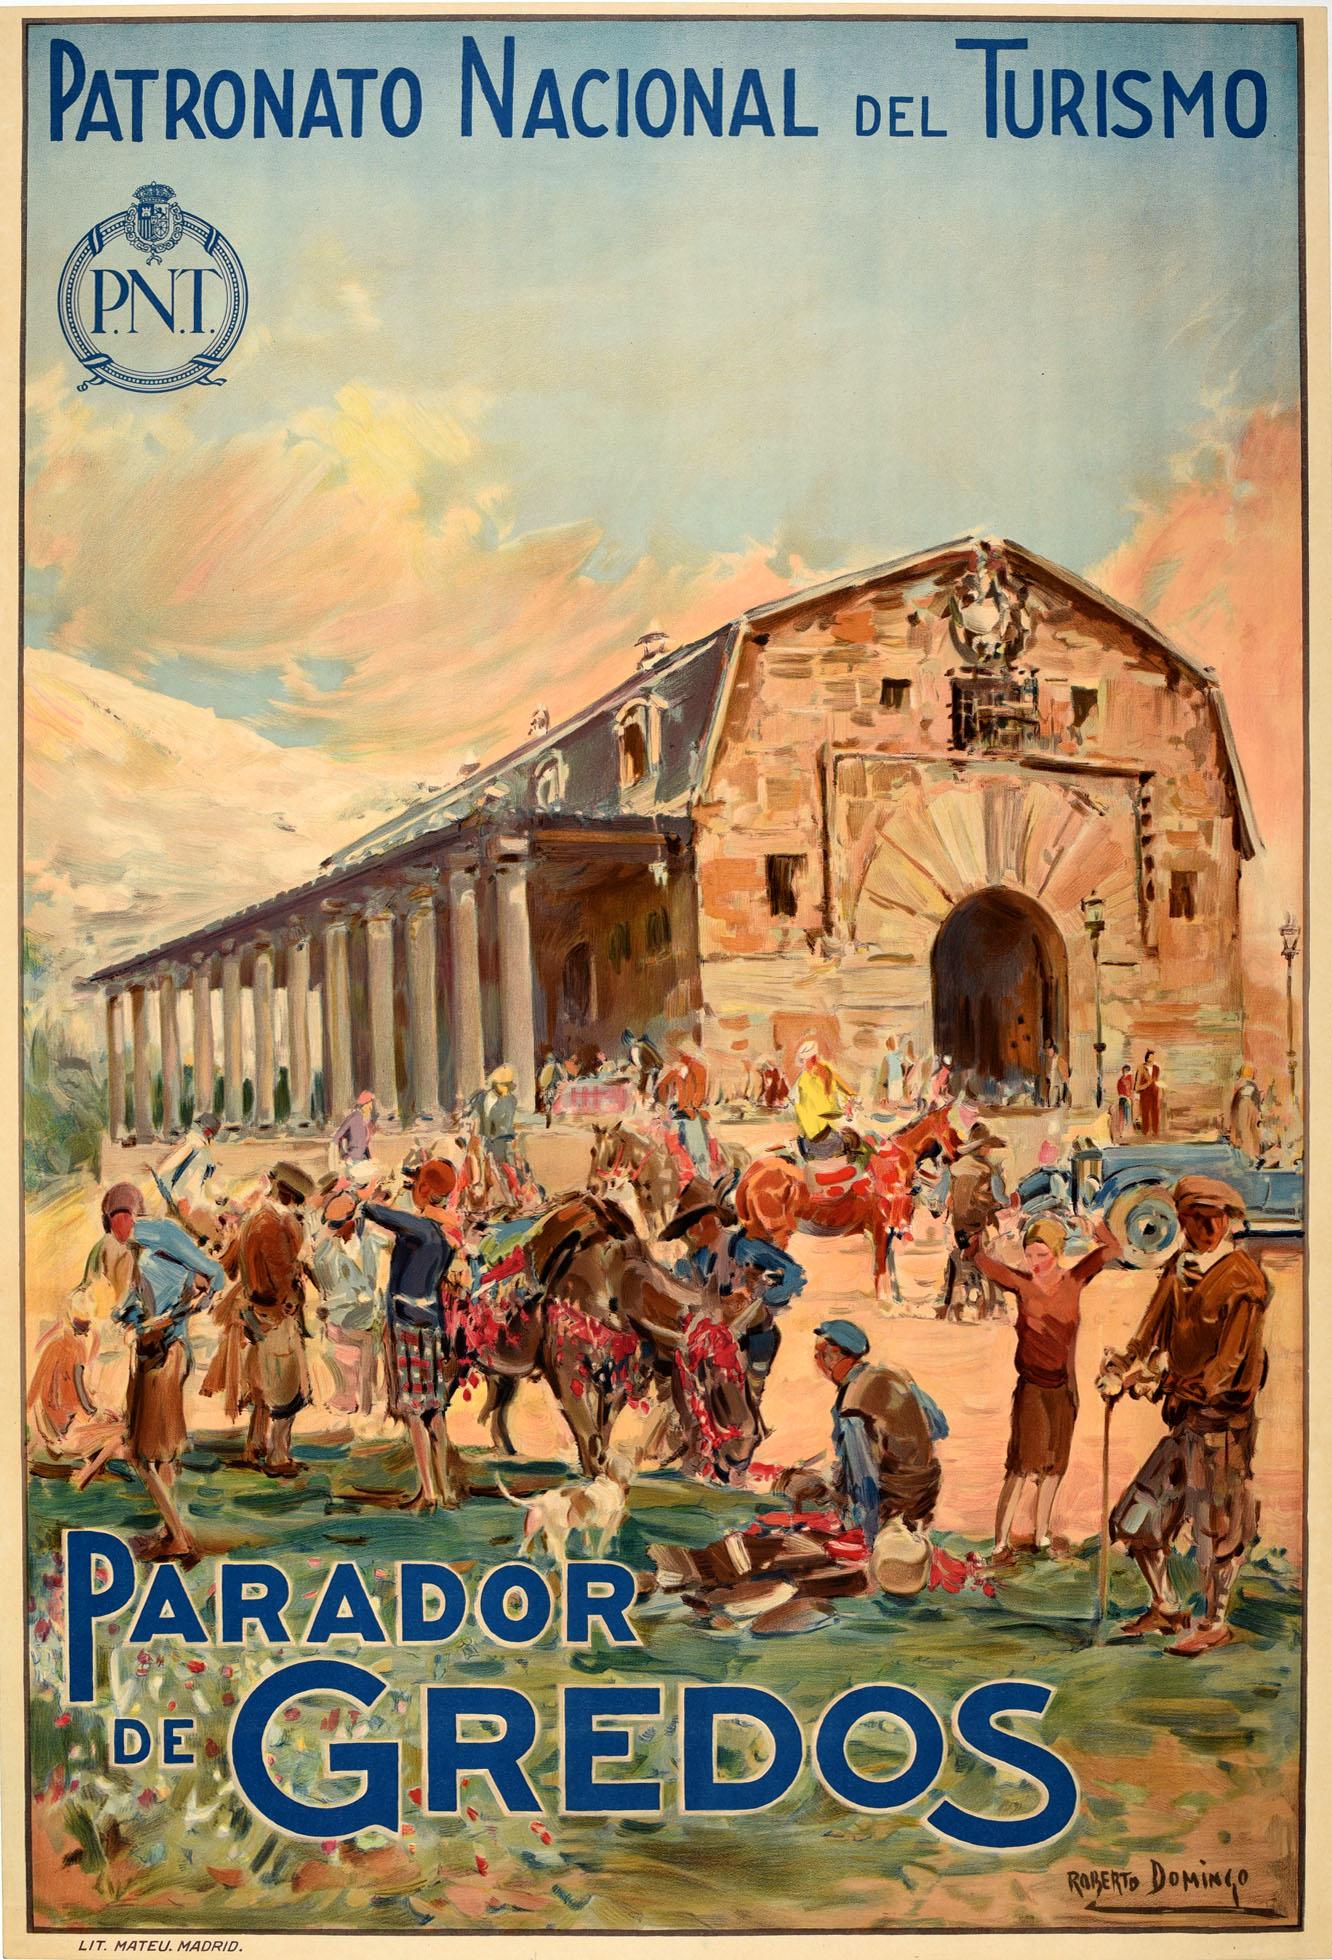 Roberto Domingo Fallola Print - Original Vintage Poster Parador De Gredos Spain Travel Art Sierra Mountains PNT